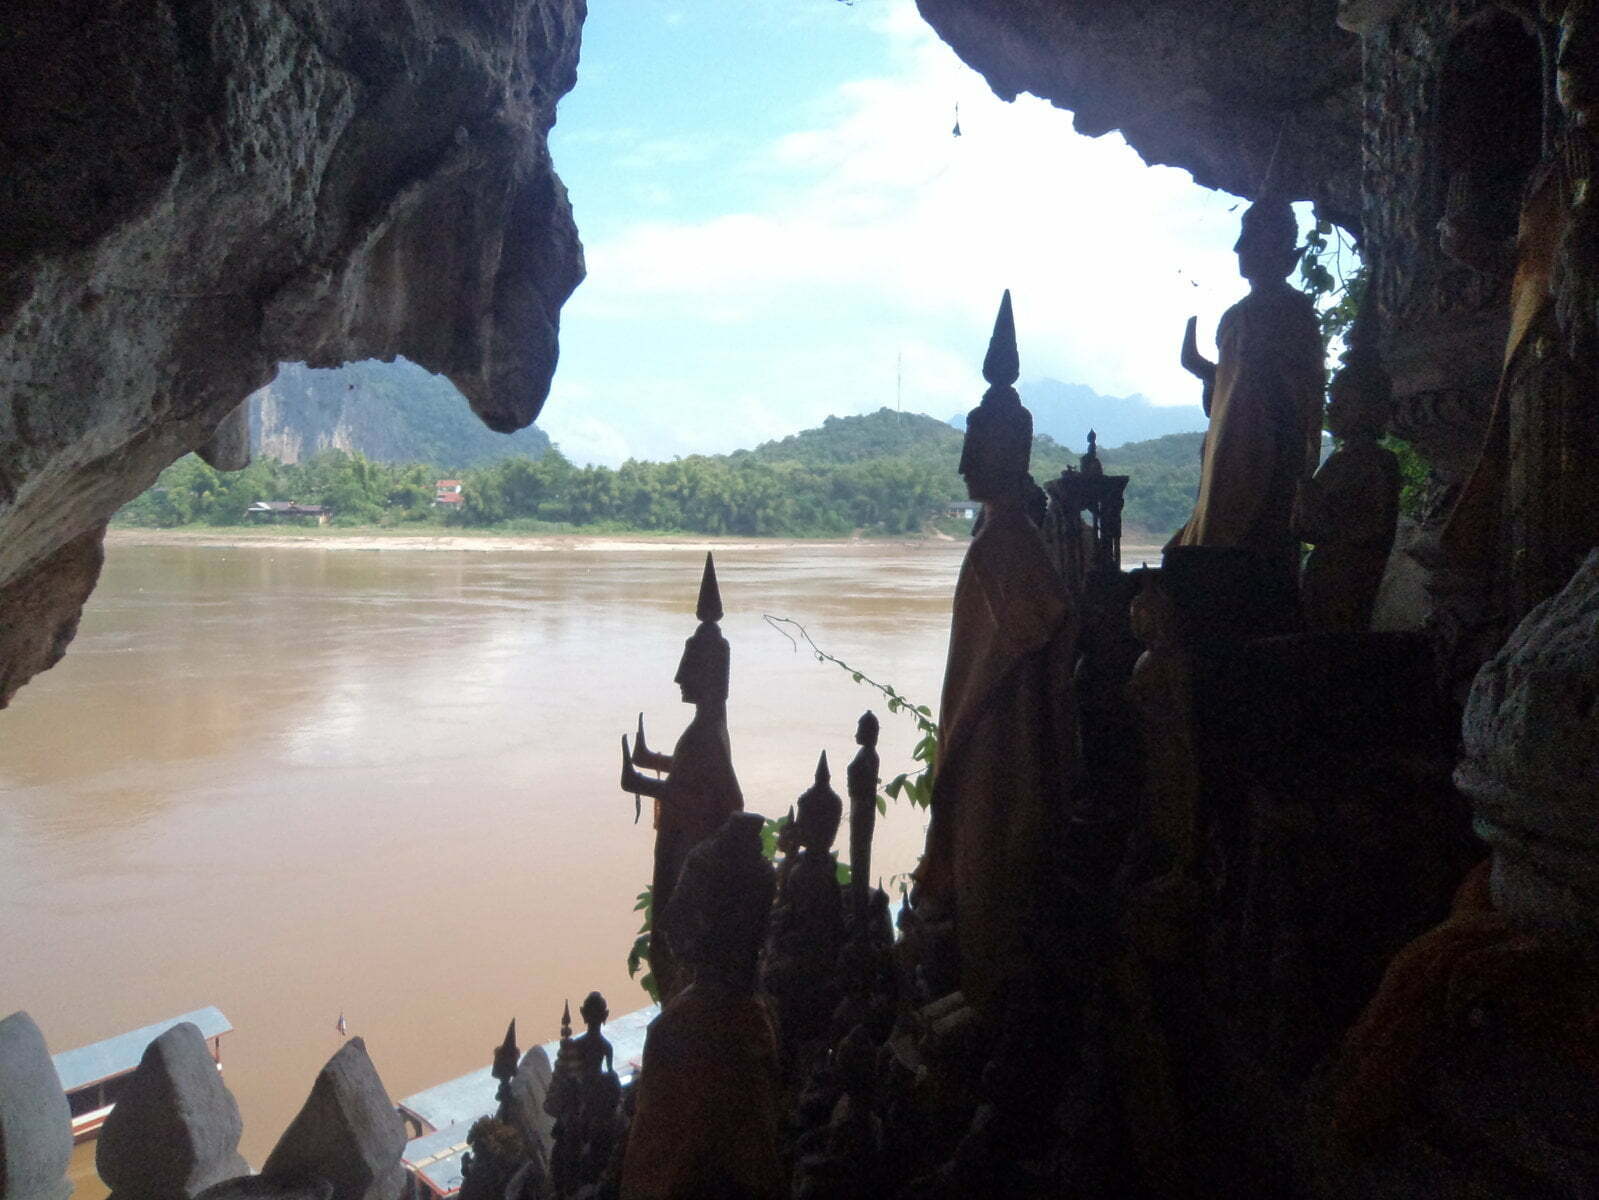 Pack Ou Cave e rio Mekong - Luang Prabang, Laos